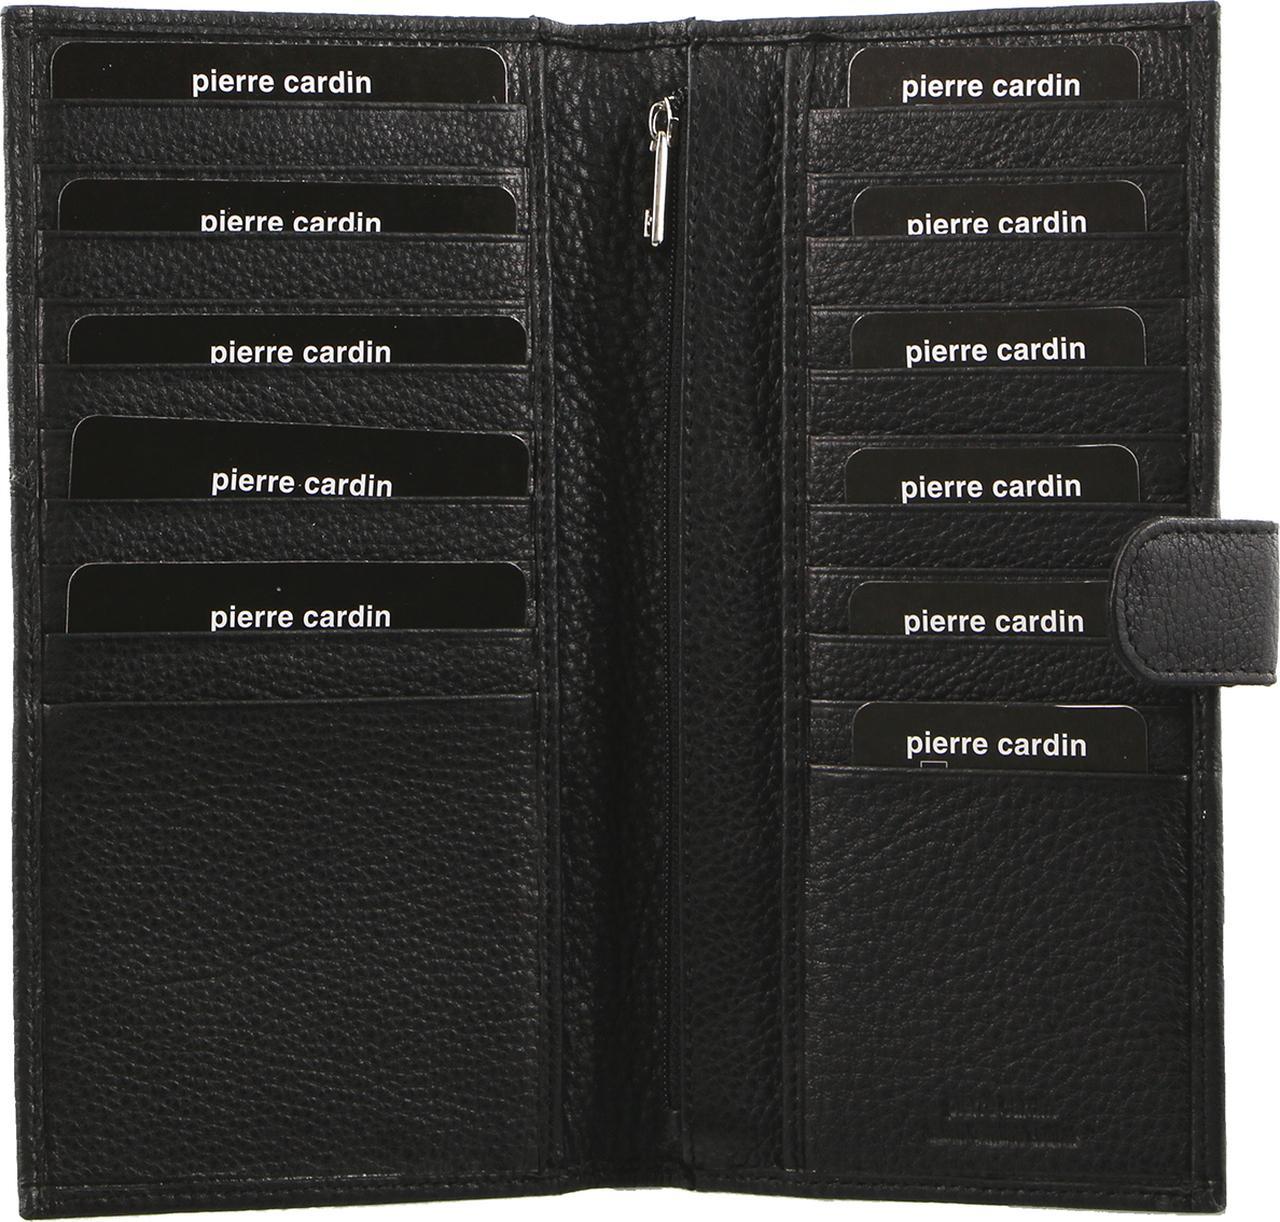 Pierre Cardin RFID Travel Leather Passport Wallet Holder Blocking Anti Scan - Black